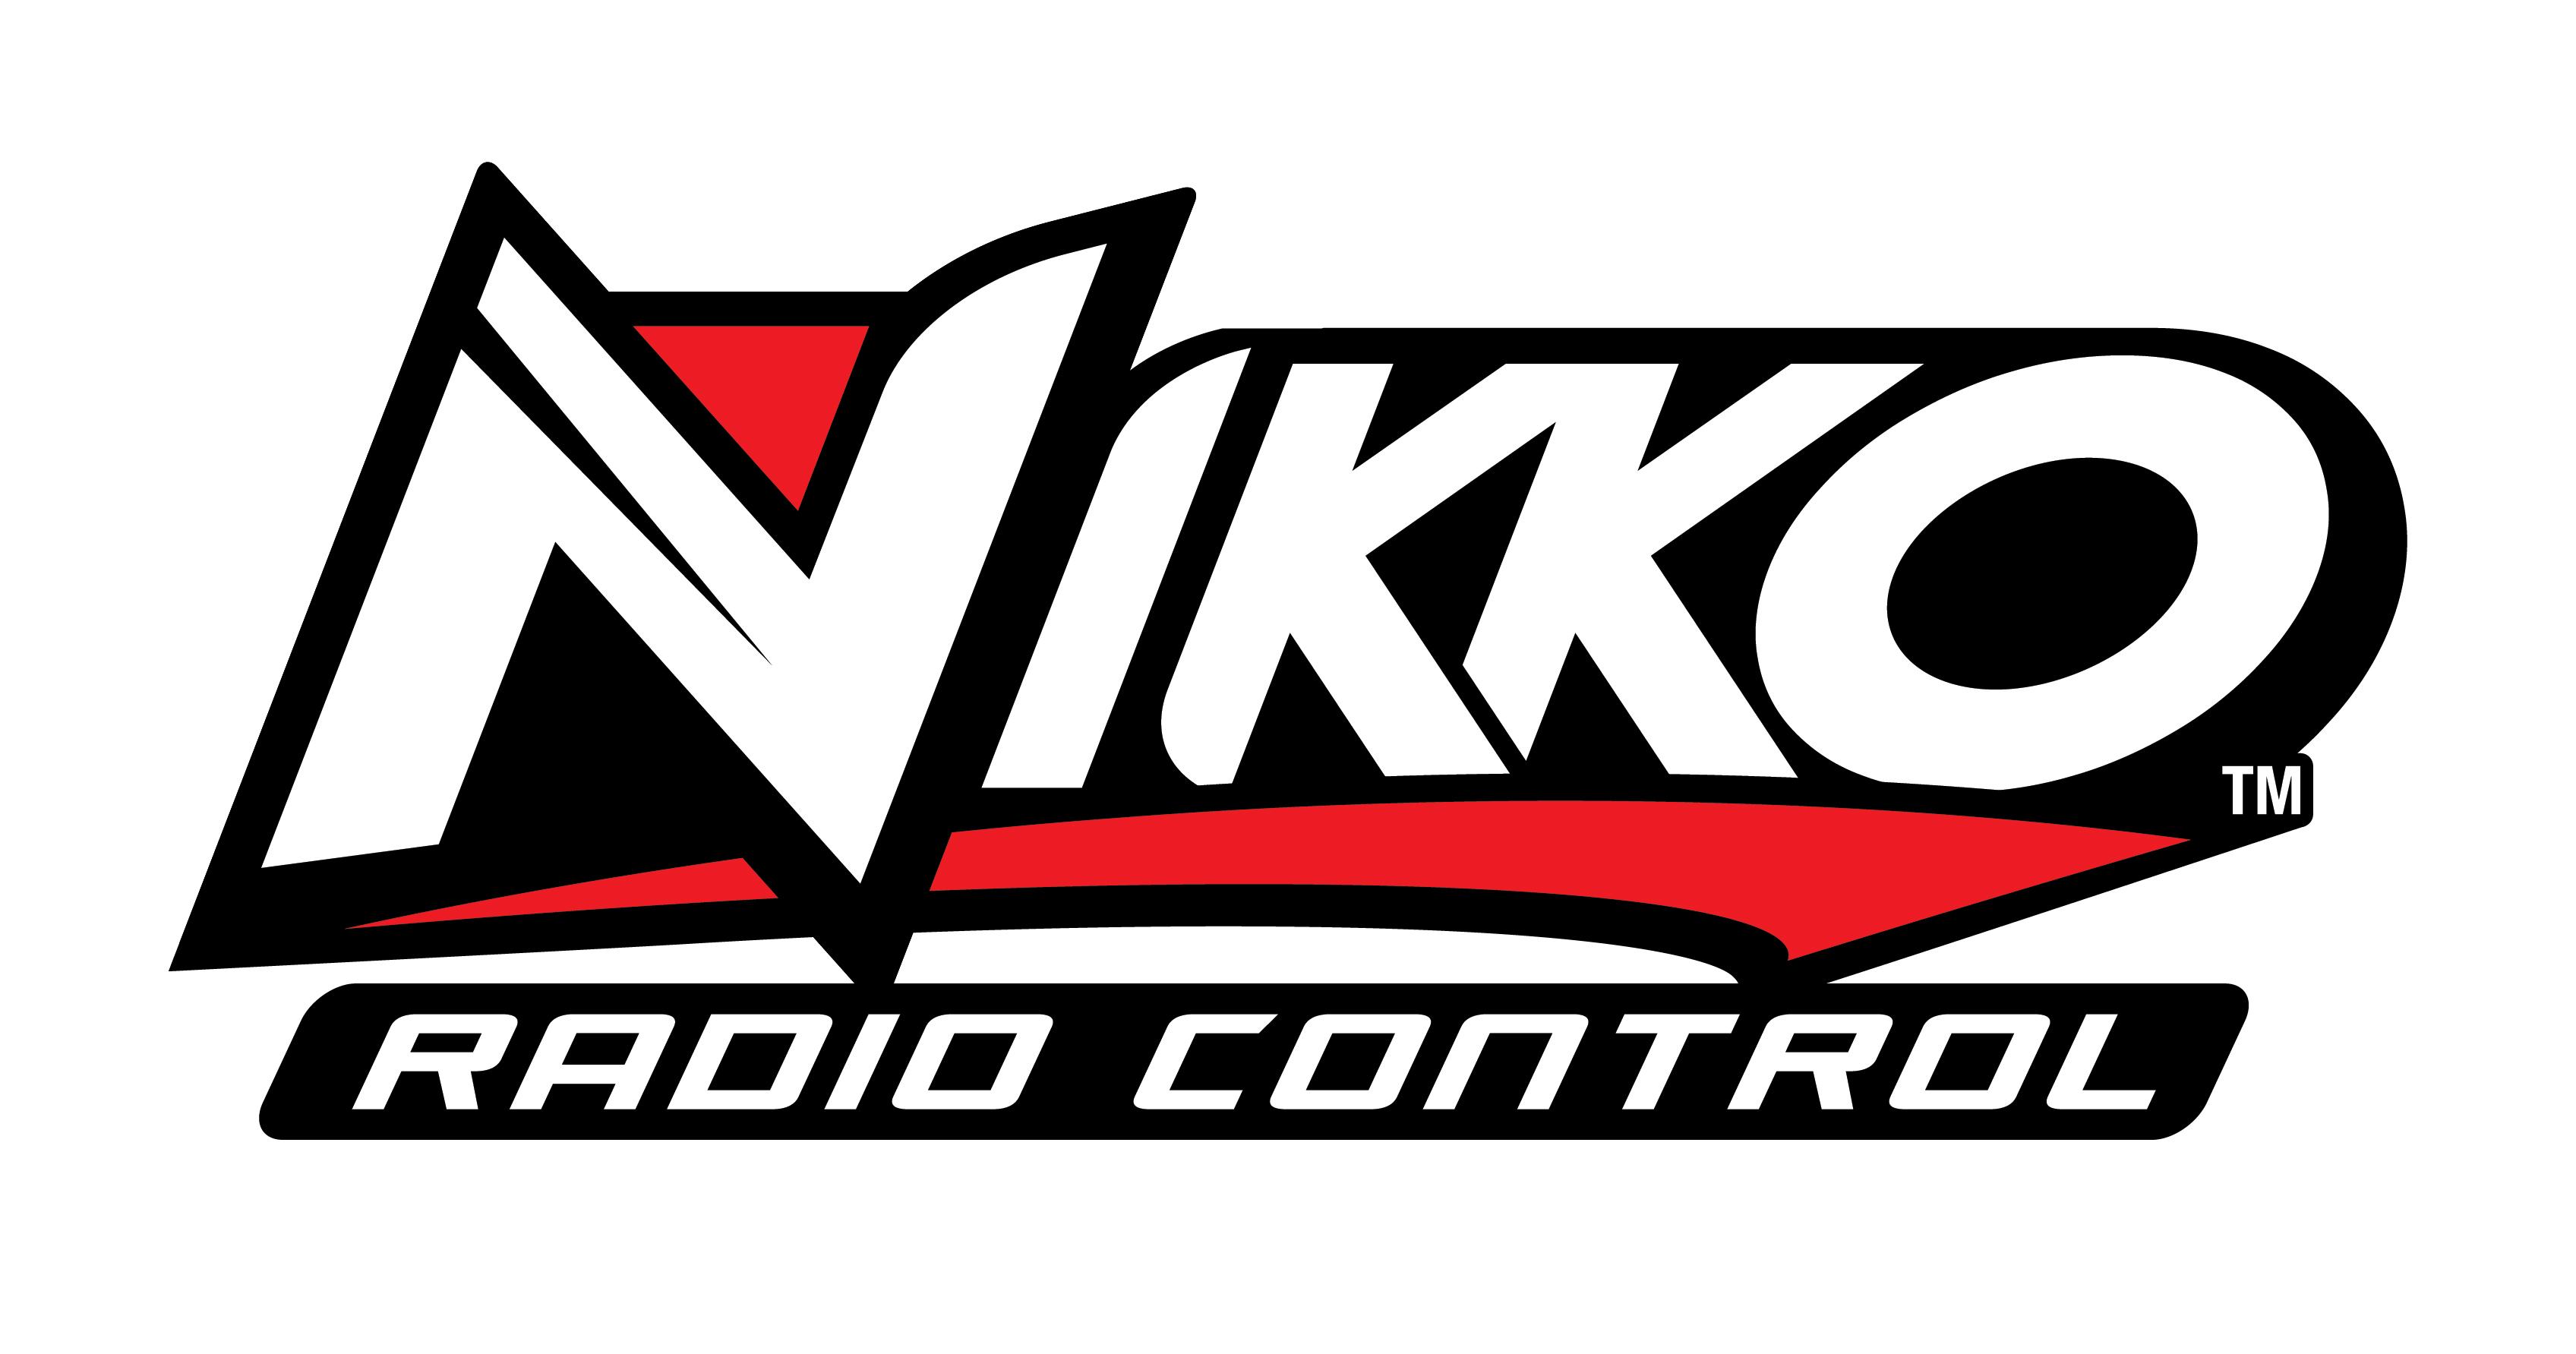 Nikko – Verkkokauppa.com